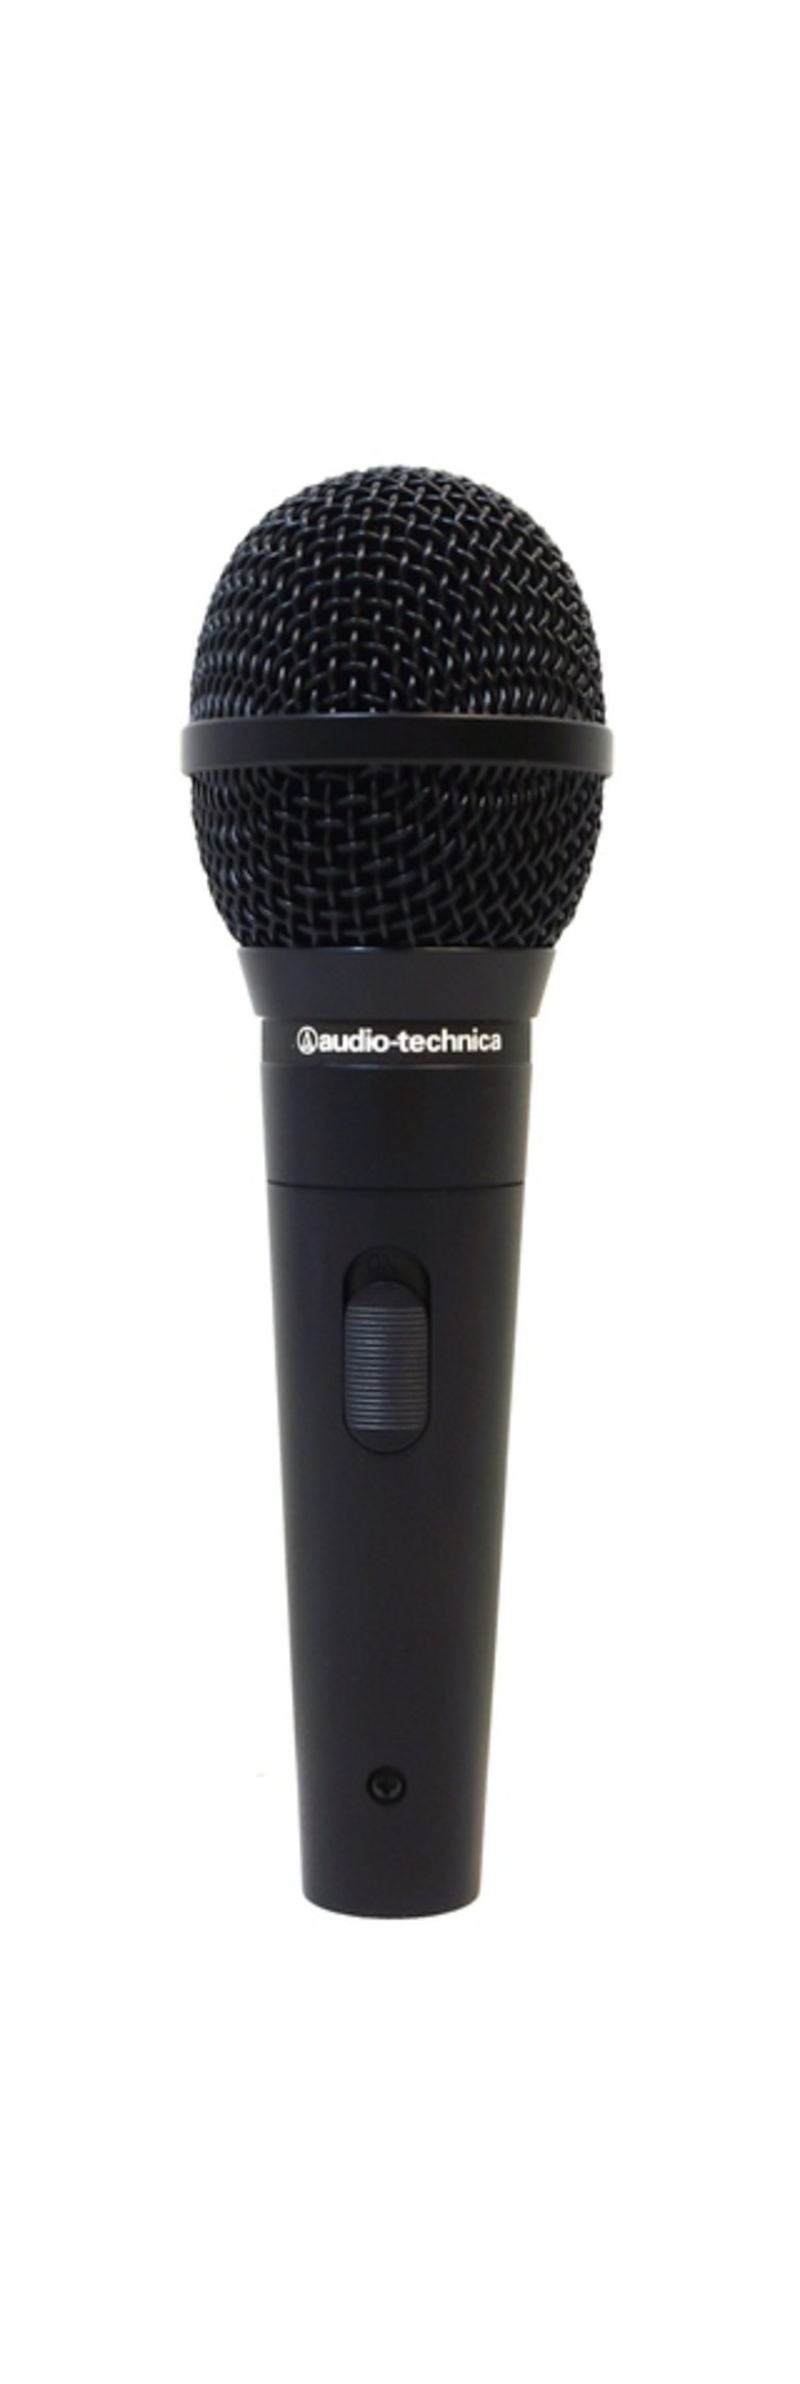 Audio-Technica ATR-1300 Unidirectional Dynamic Wired Microphone - Black